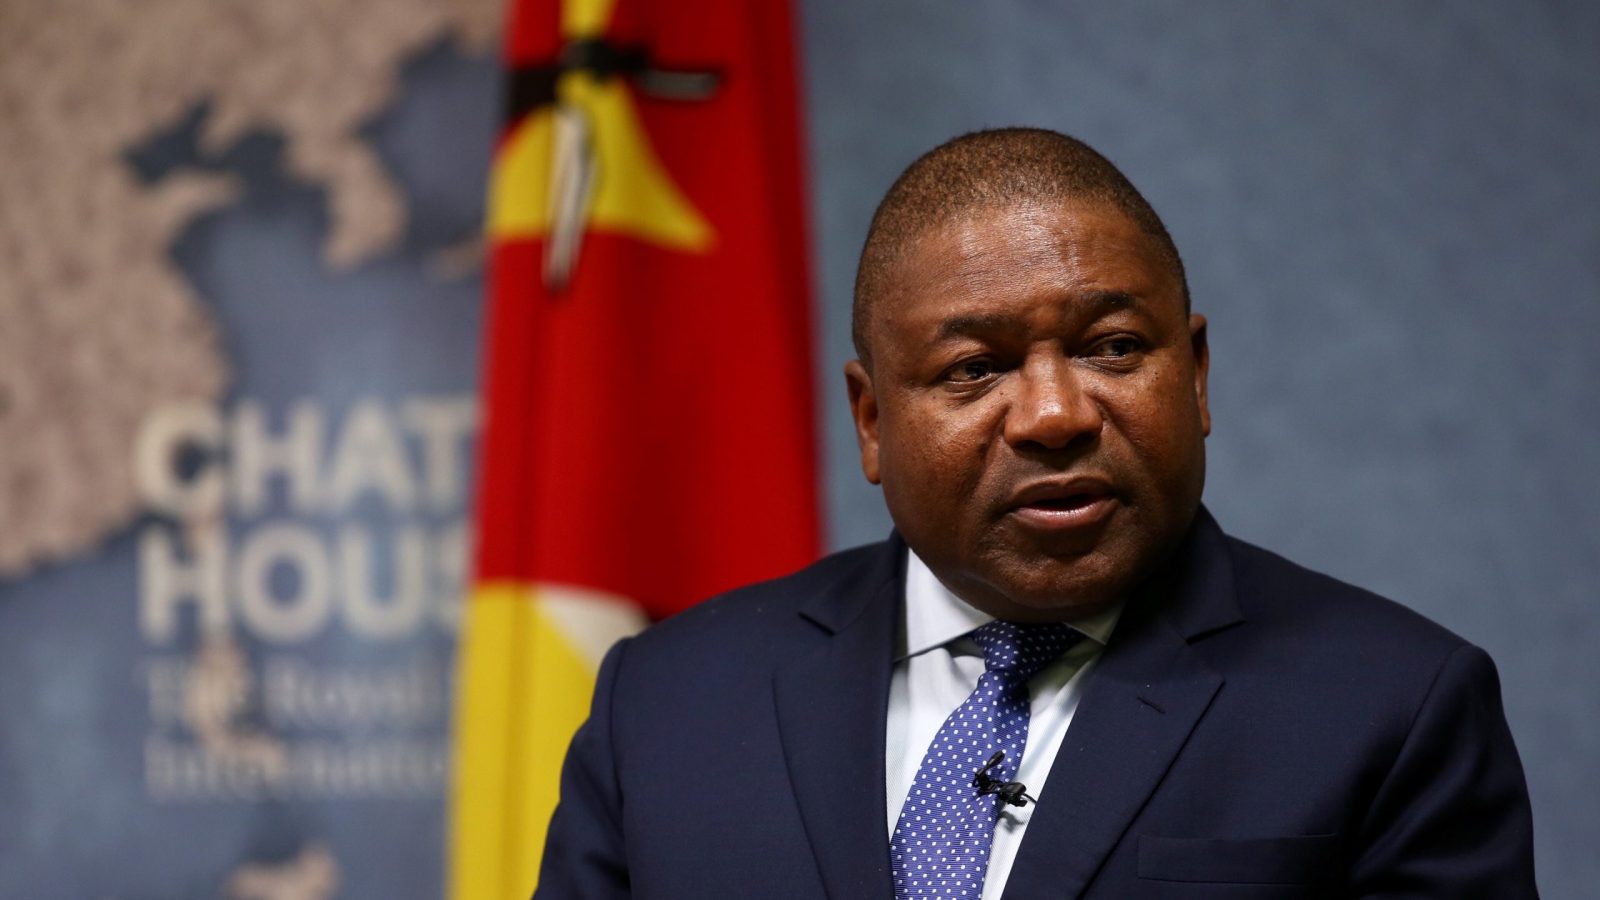 Current Mozambique President Nyusi